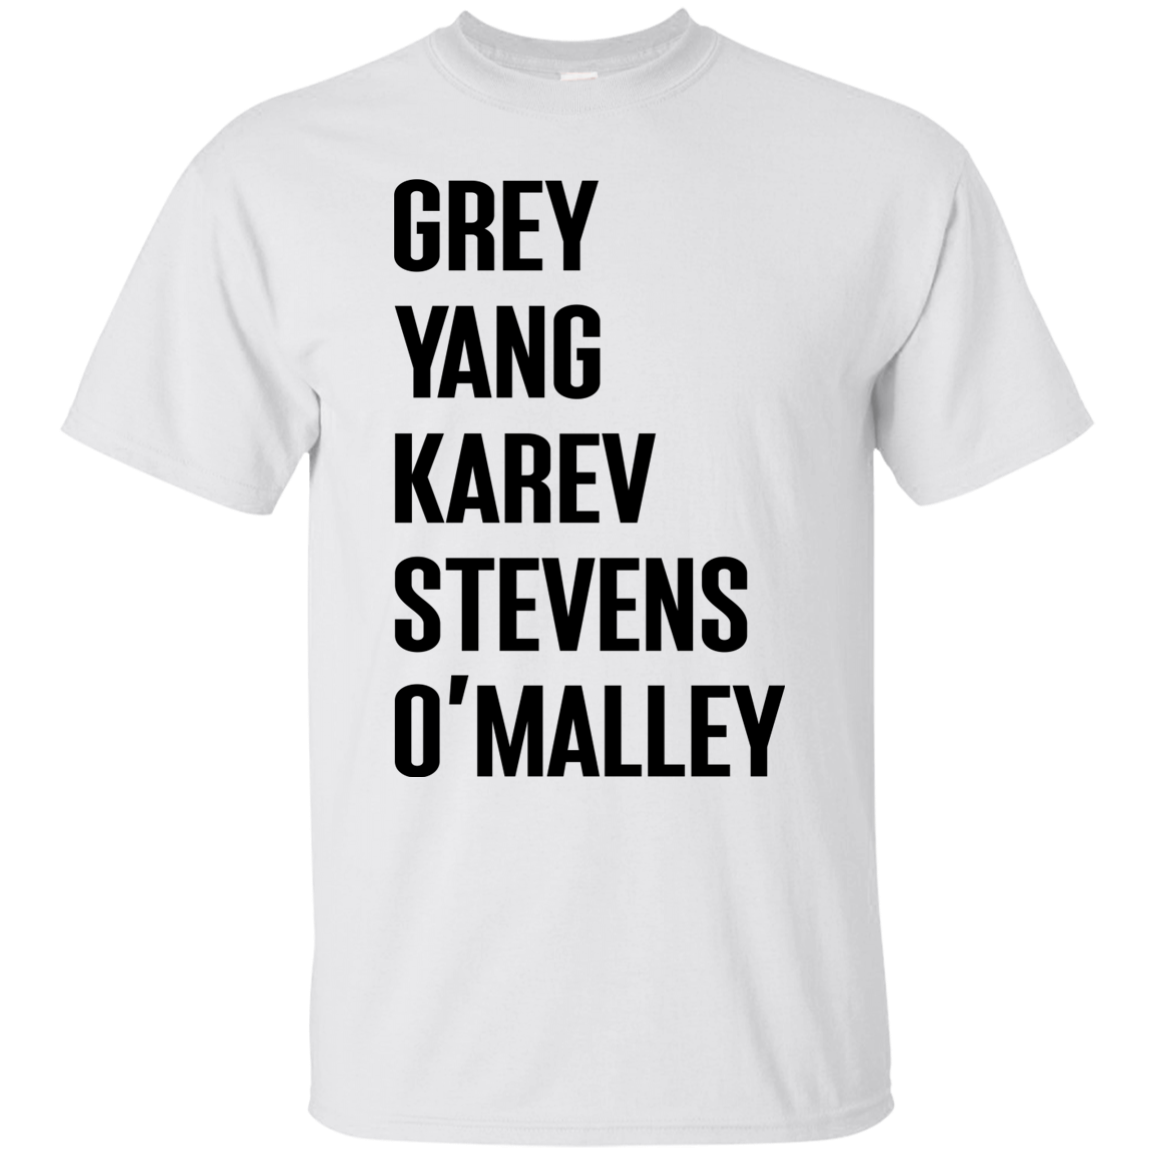 Greys Anatomy Sweater, Shirt: Grey Yang Karev Stevens O'Malley